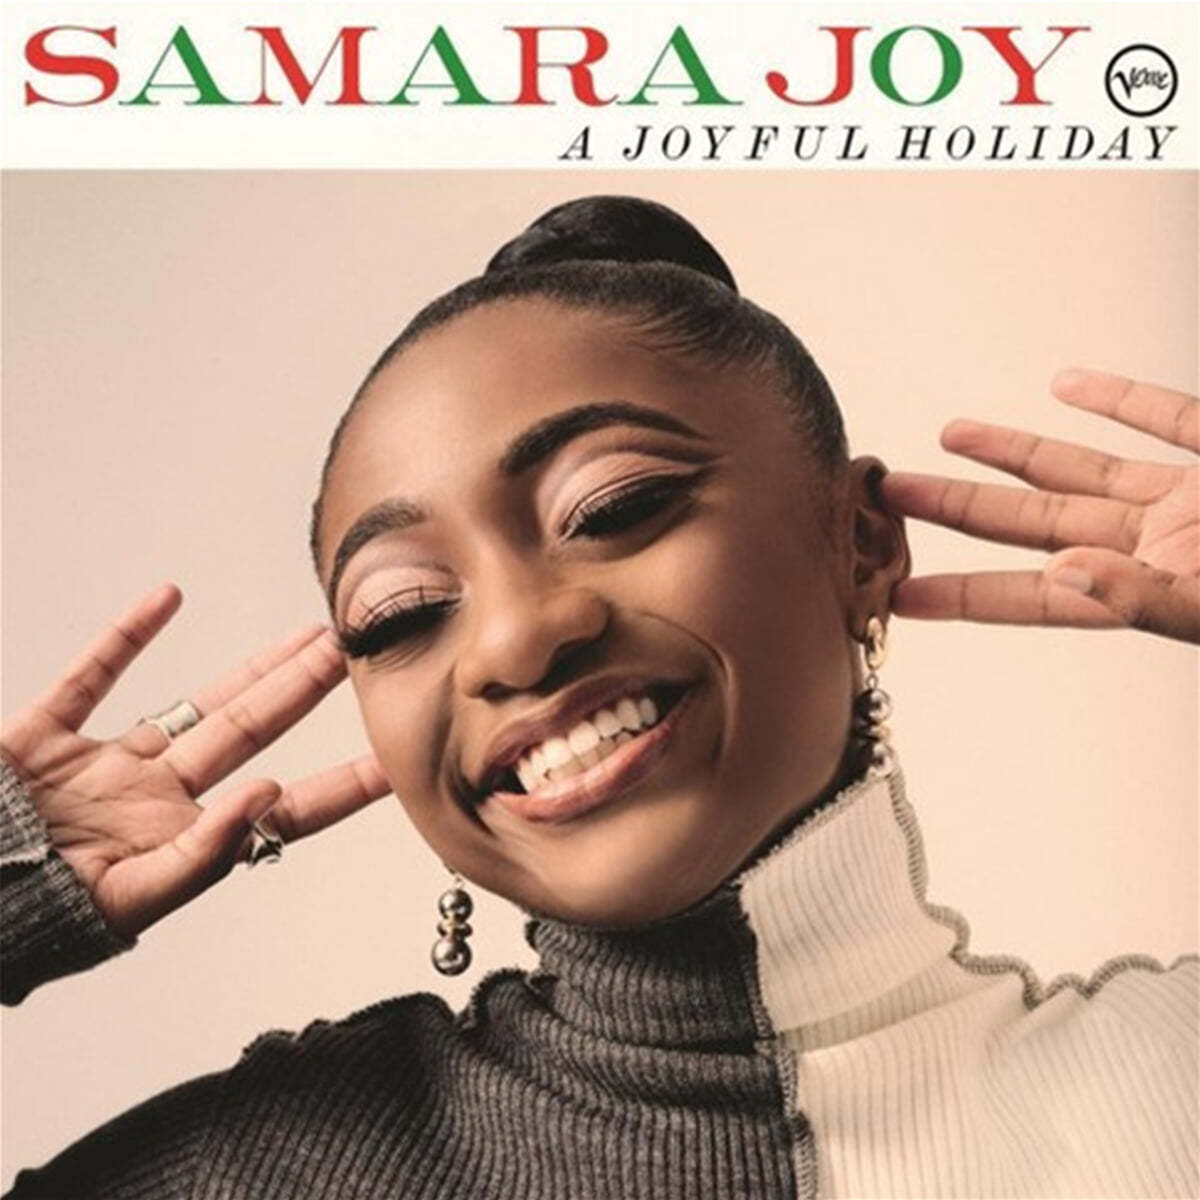 Samara Joy (사마라 조이) - A Joyful Holiday 